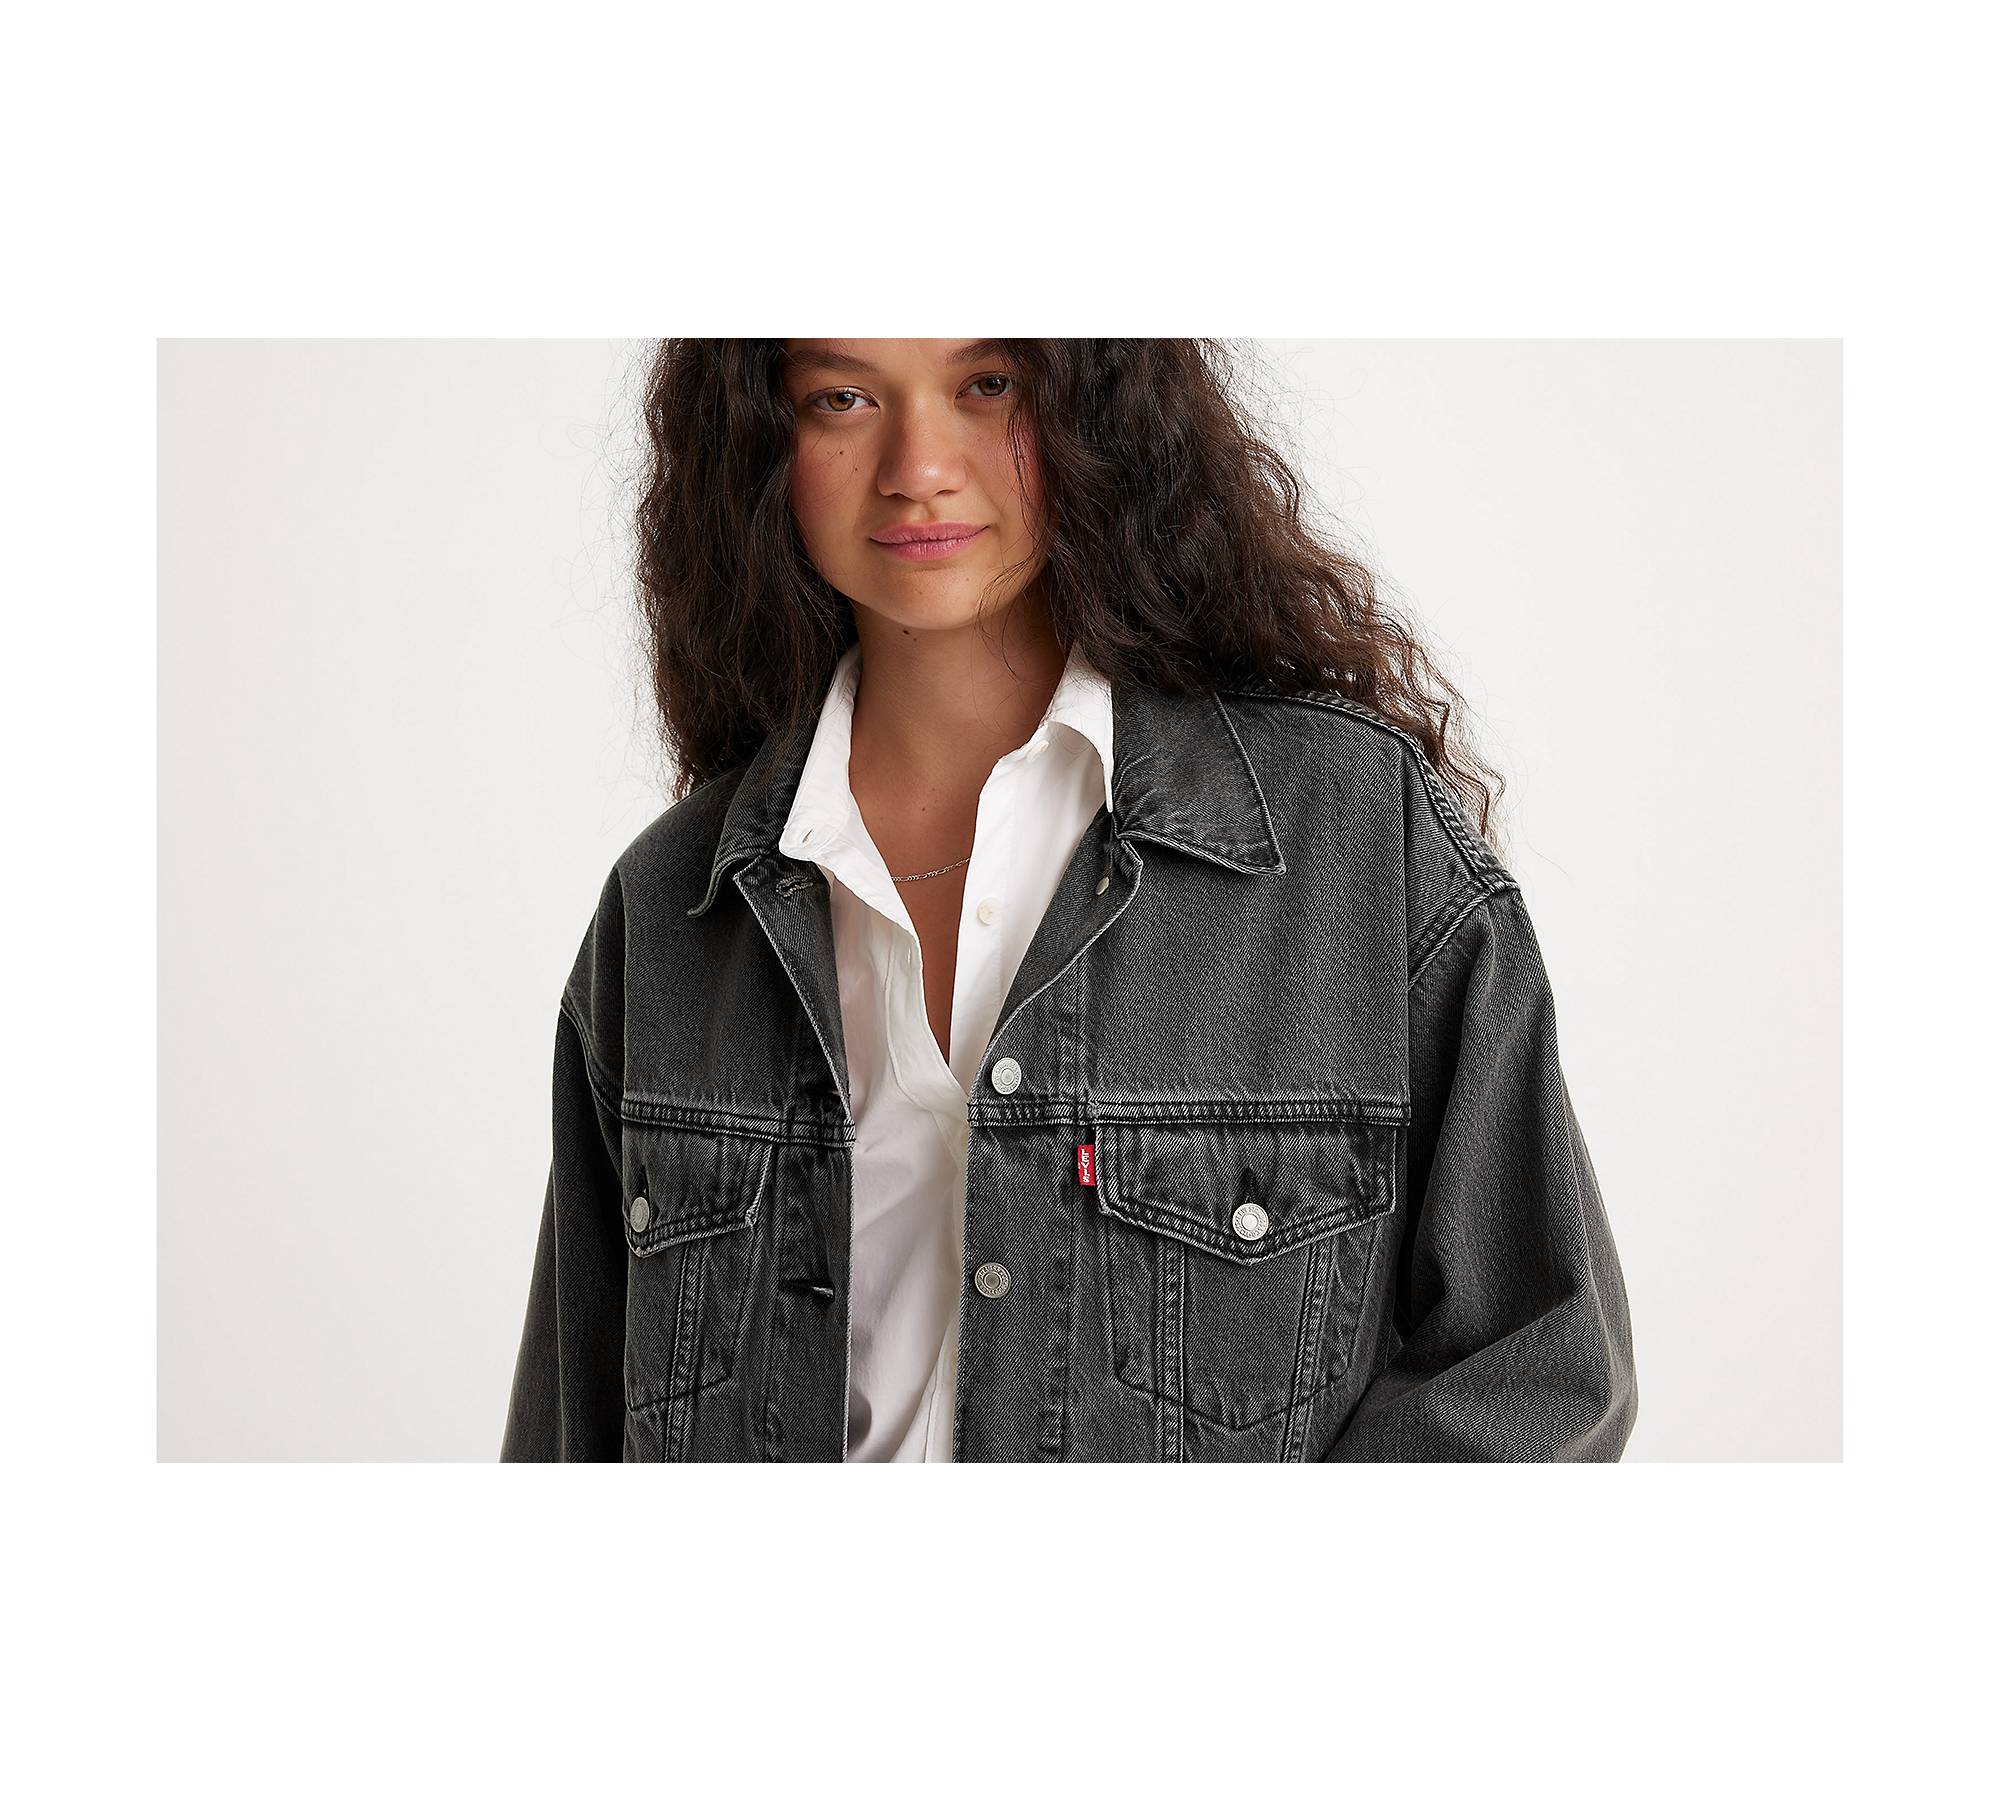 Leather denim jacket, 99,90 €